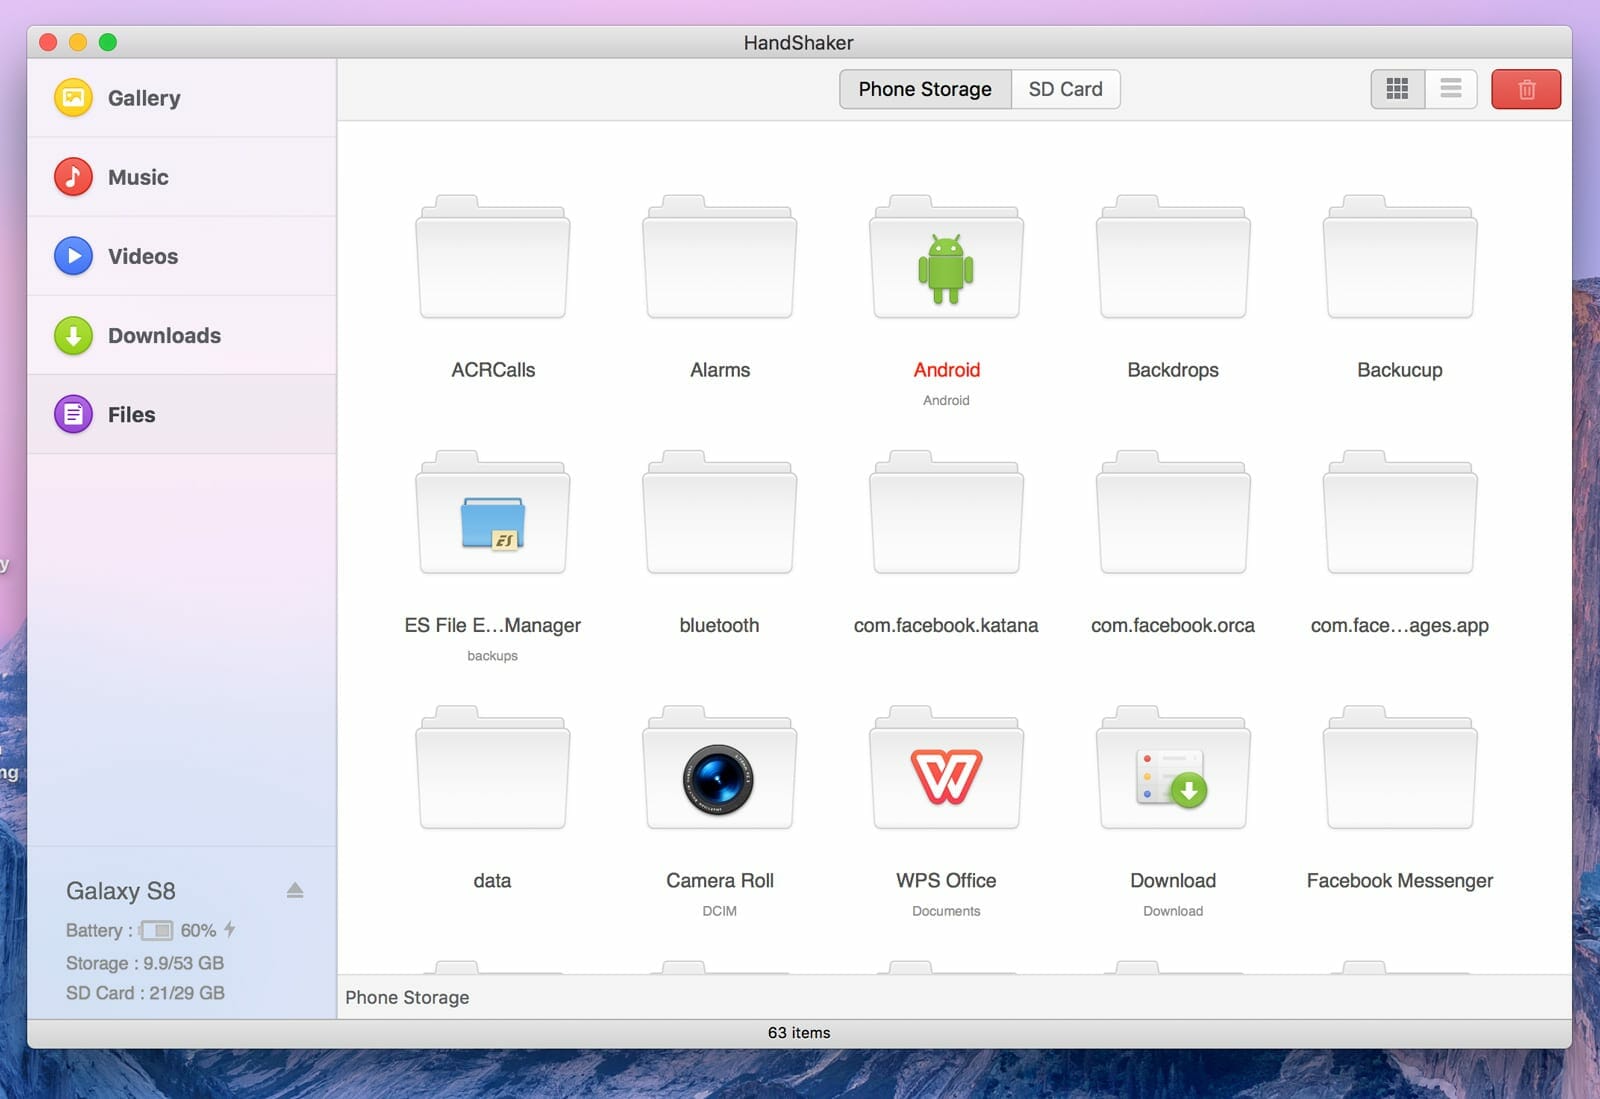 Android file size. Андроид файл трансфер. Андроид и Mac os синхронизация файлов. Эмулятор андроид на Мак. Андроид файл трансфер для Мак.